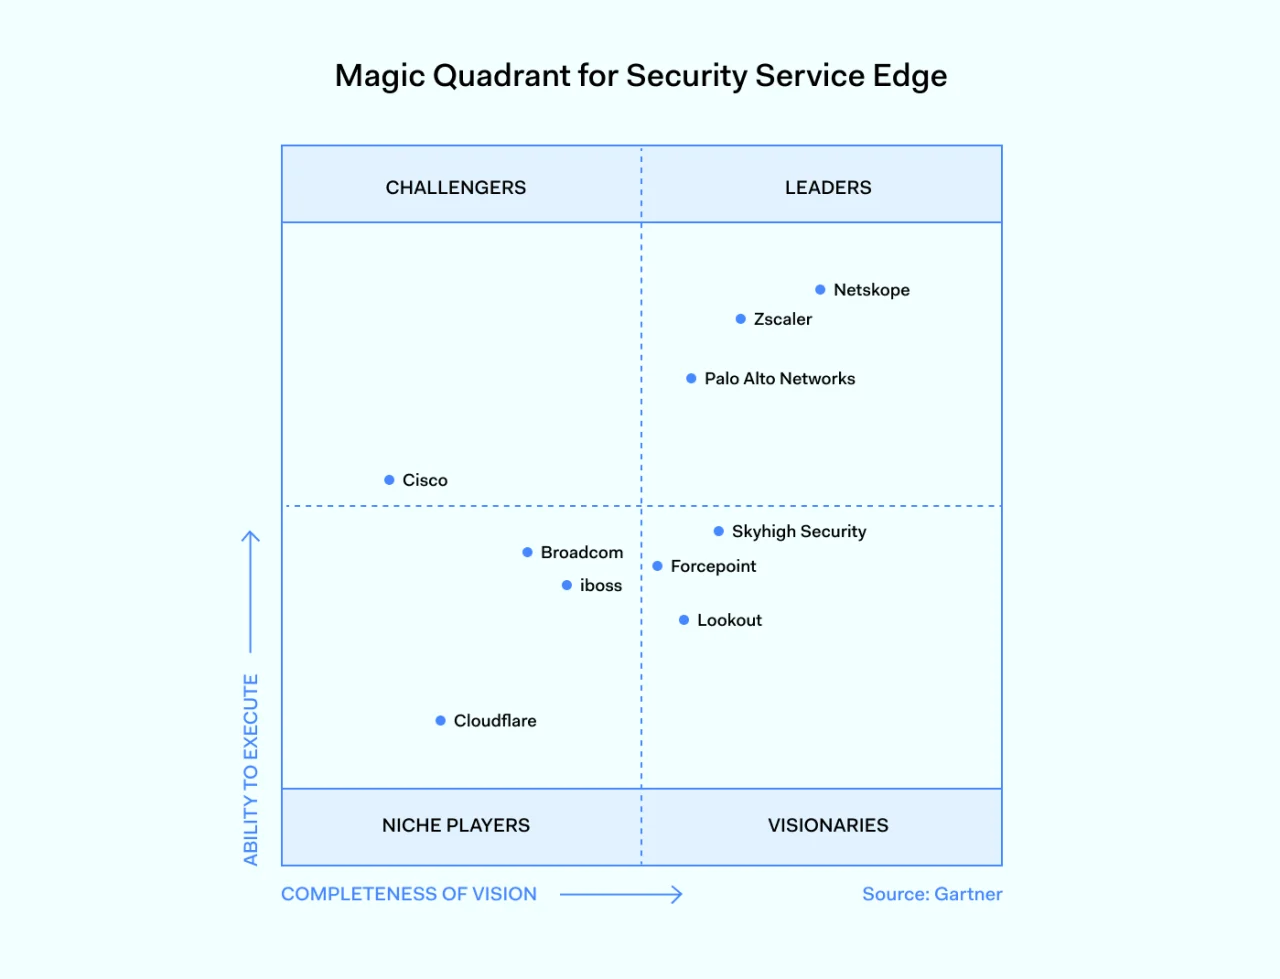 Gartner's SSE Magic Quadrant